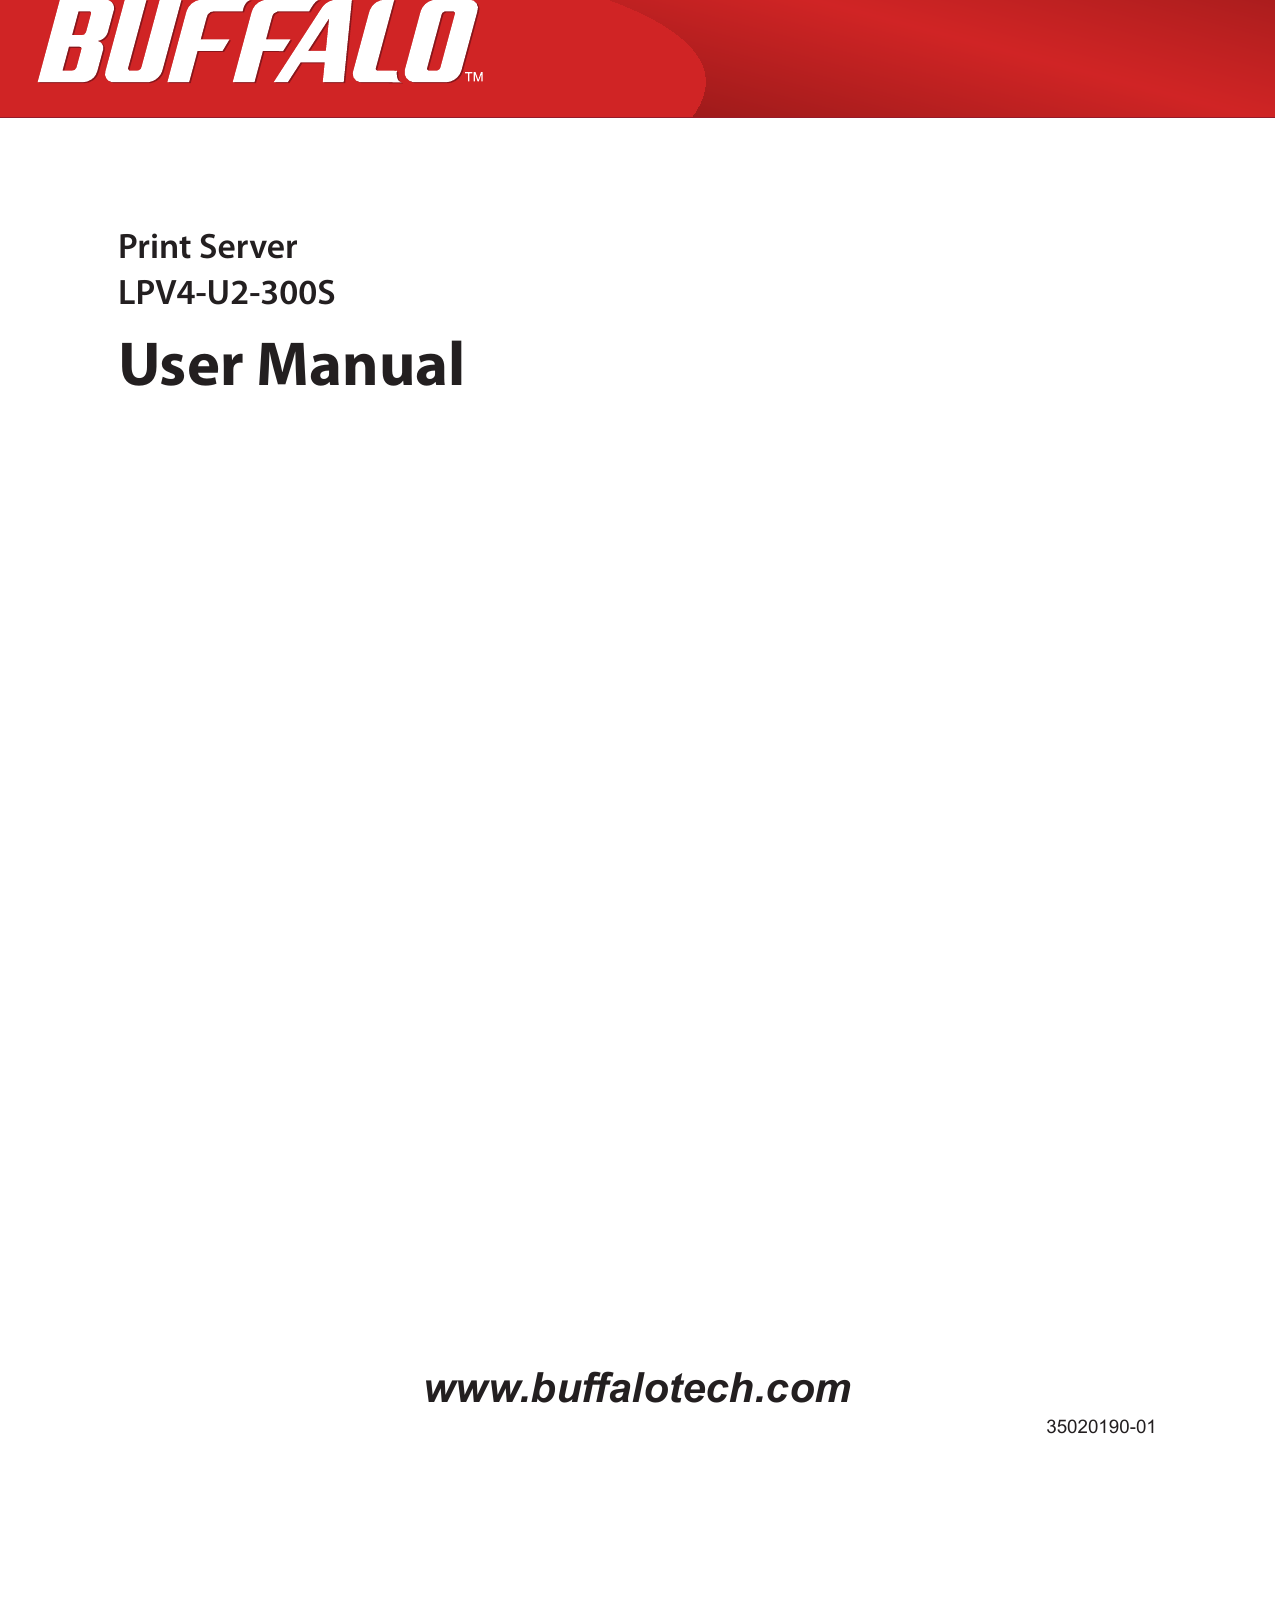 Print ServerLPV4-U2-300SUser Manualwww.buffalotech.com35020190-01